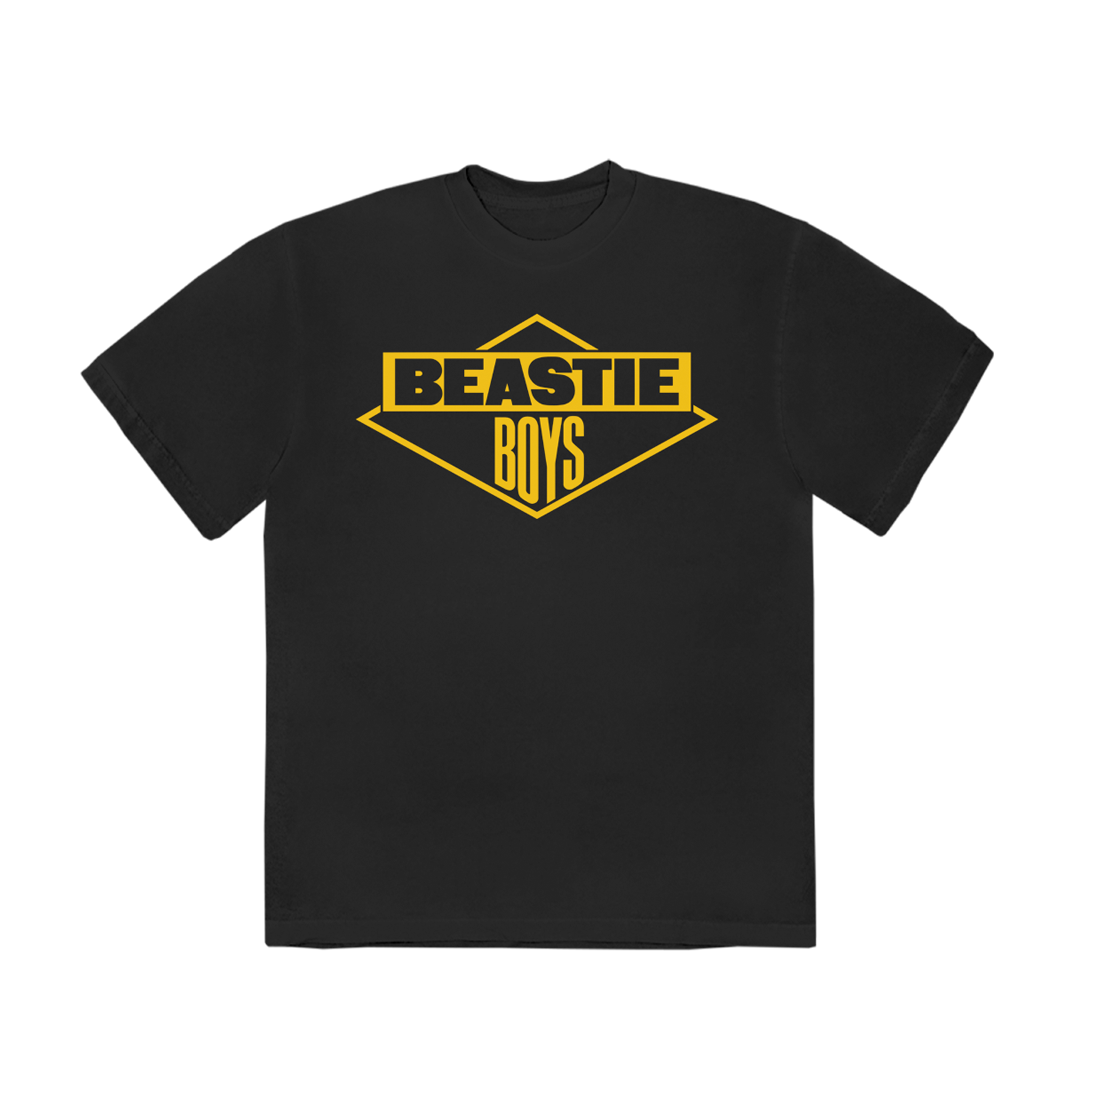 Beastie Boys - Gold Logo Men's T-Shirt